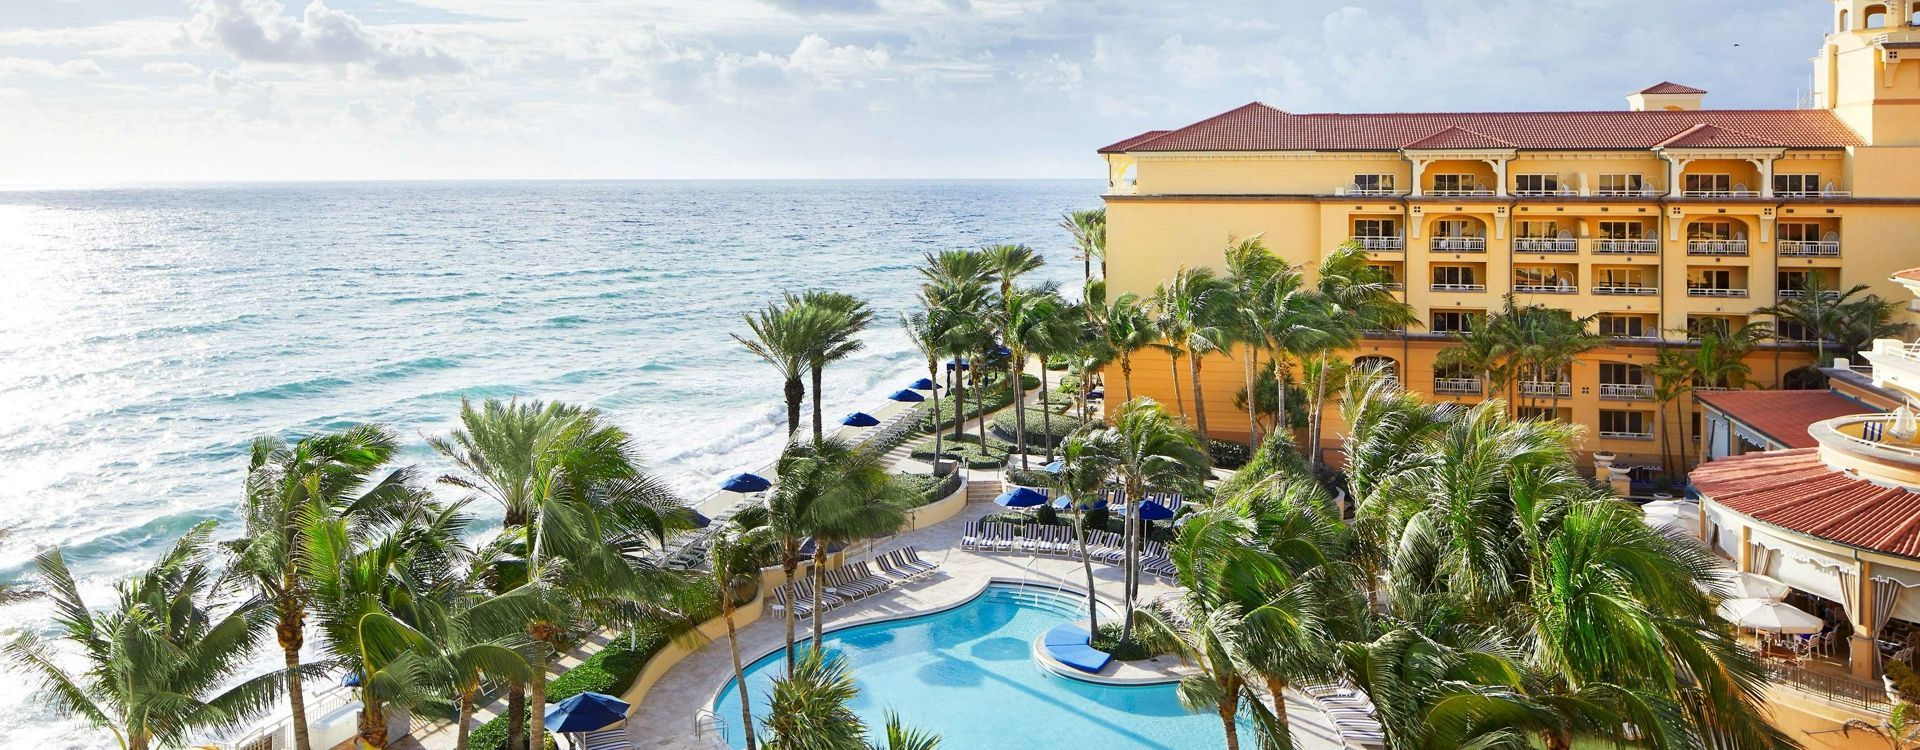 Eau Palm Beach Resort & Spa-Pool.jpg